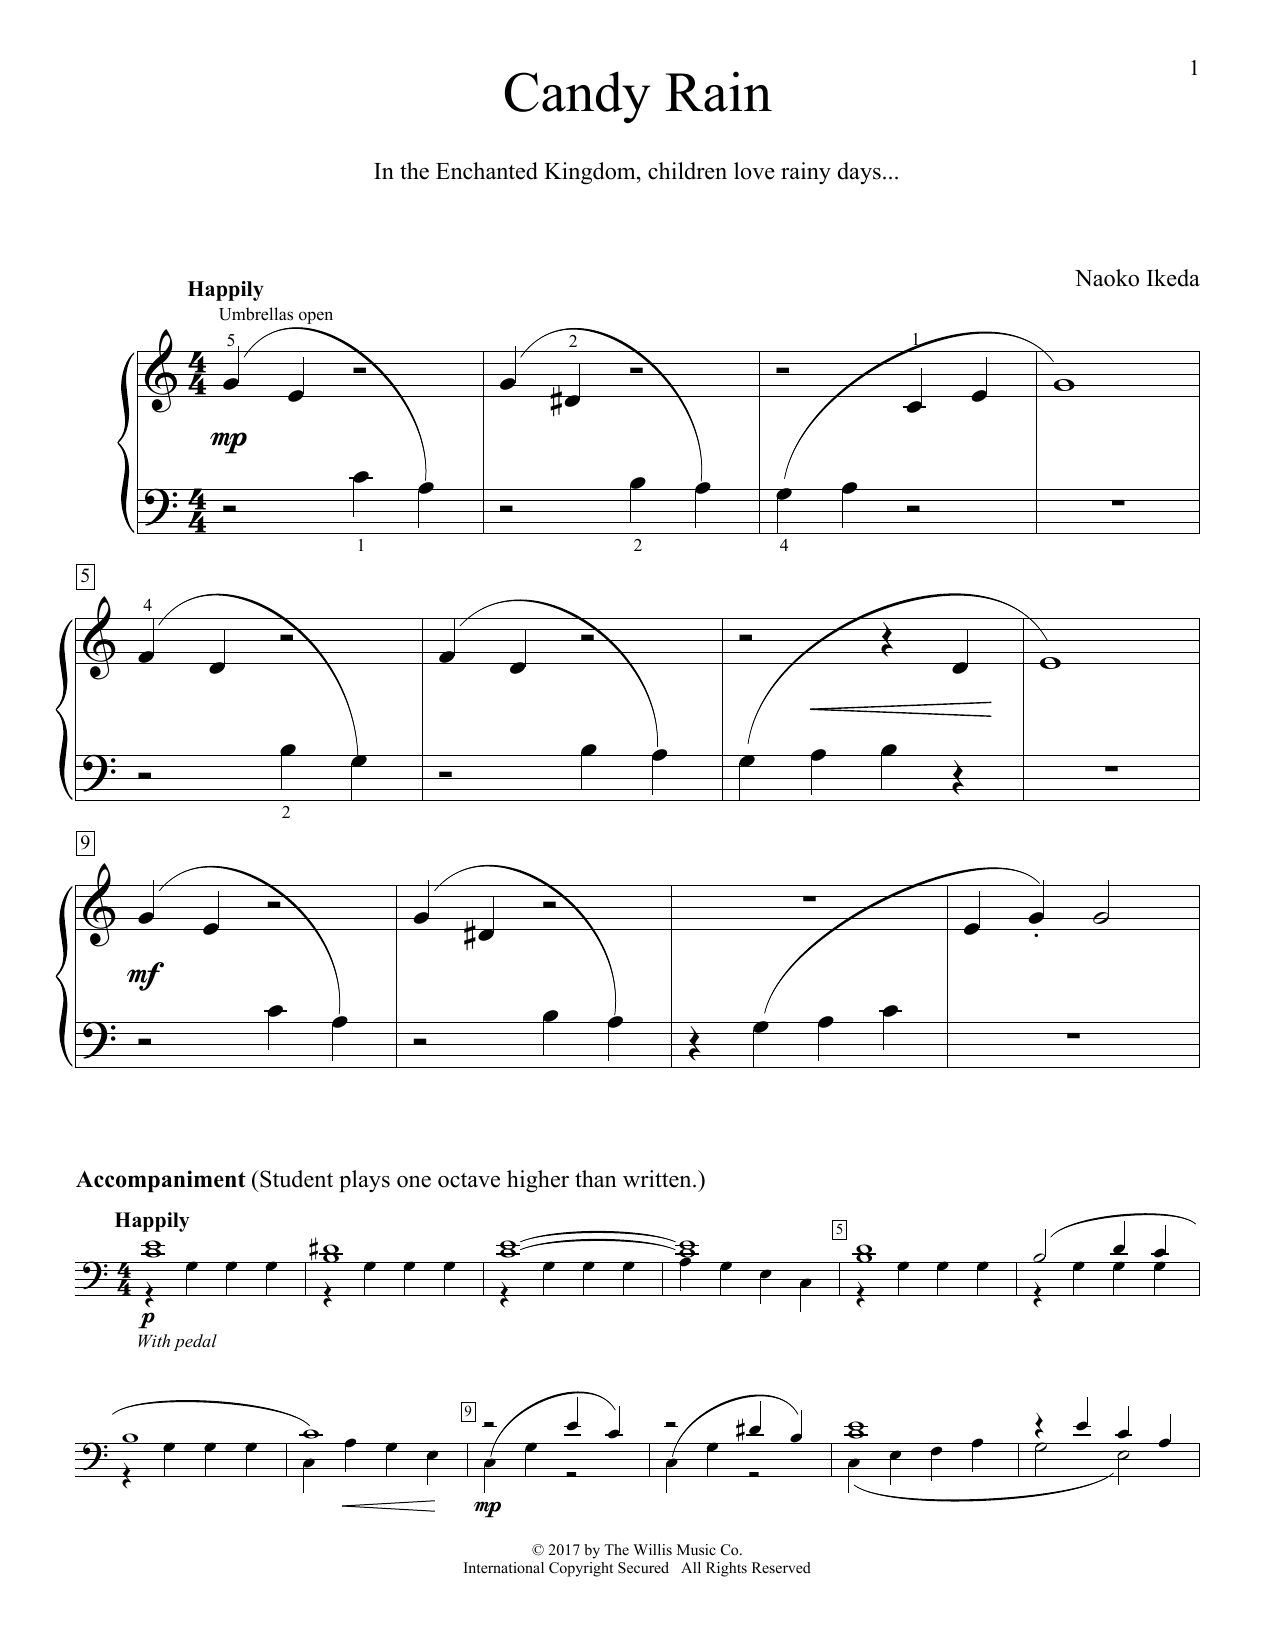 Naoko Ikeda Candy Rain Sheet Music Notes & Chords for Piano Duet - Download or Print PDF